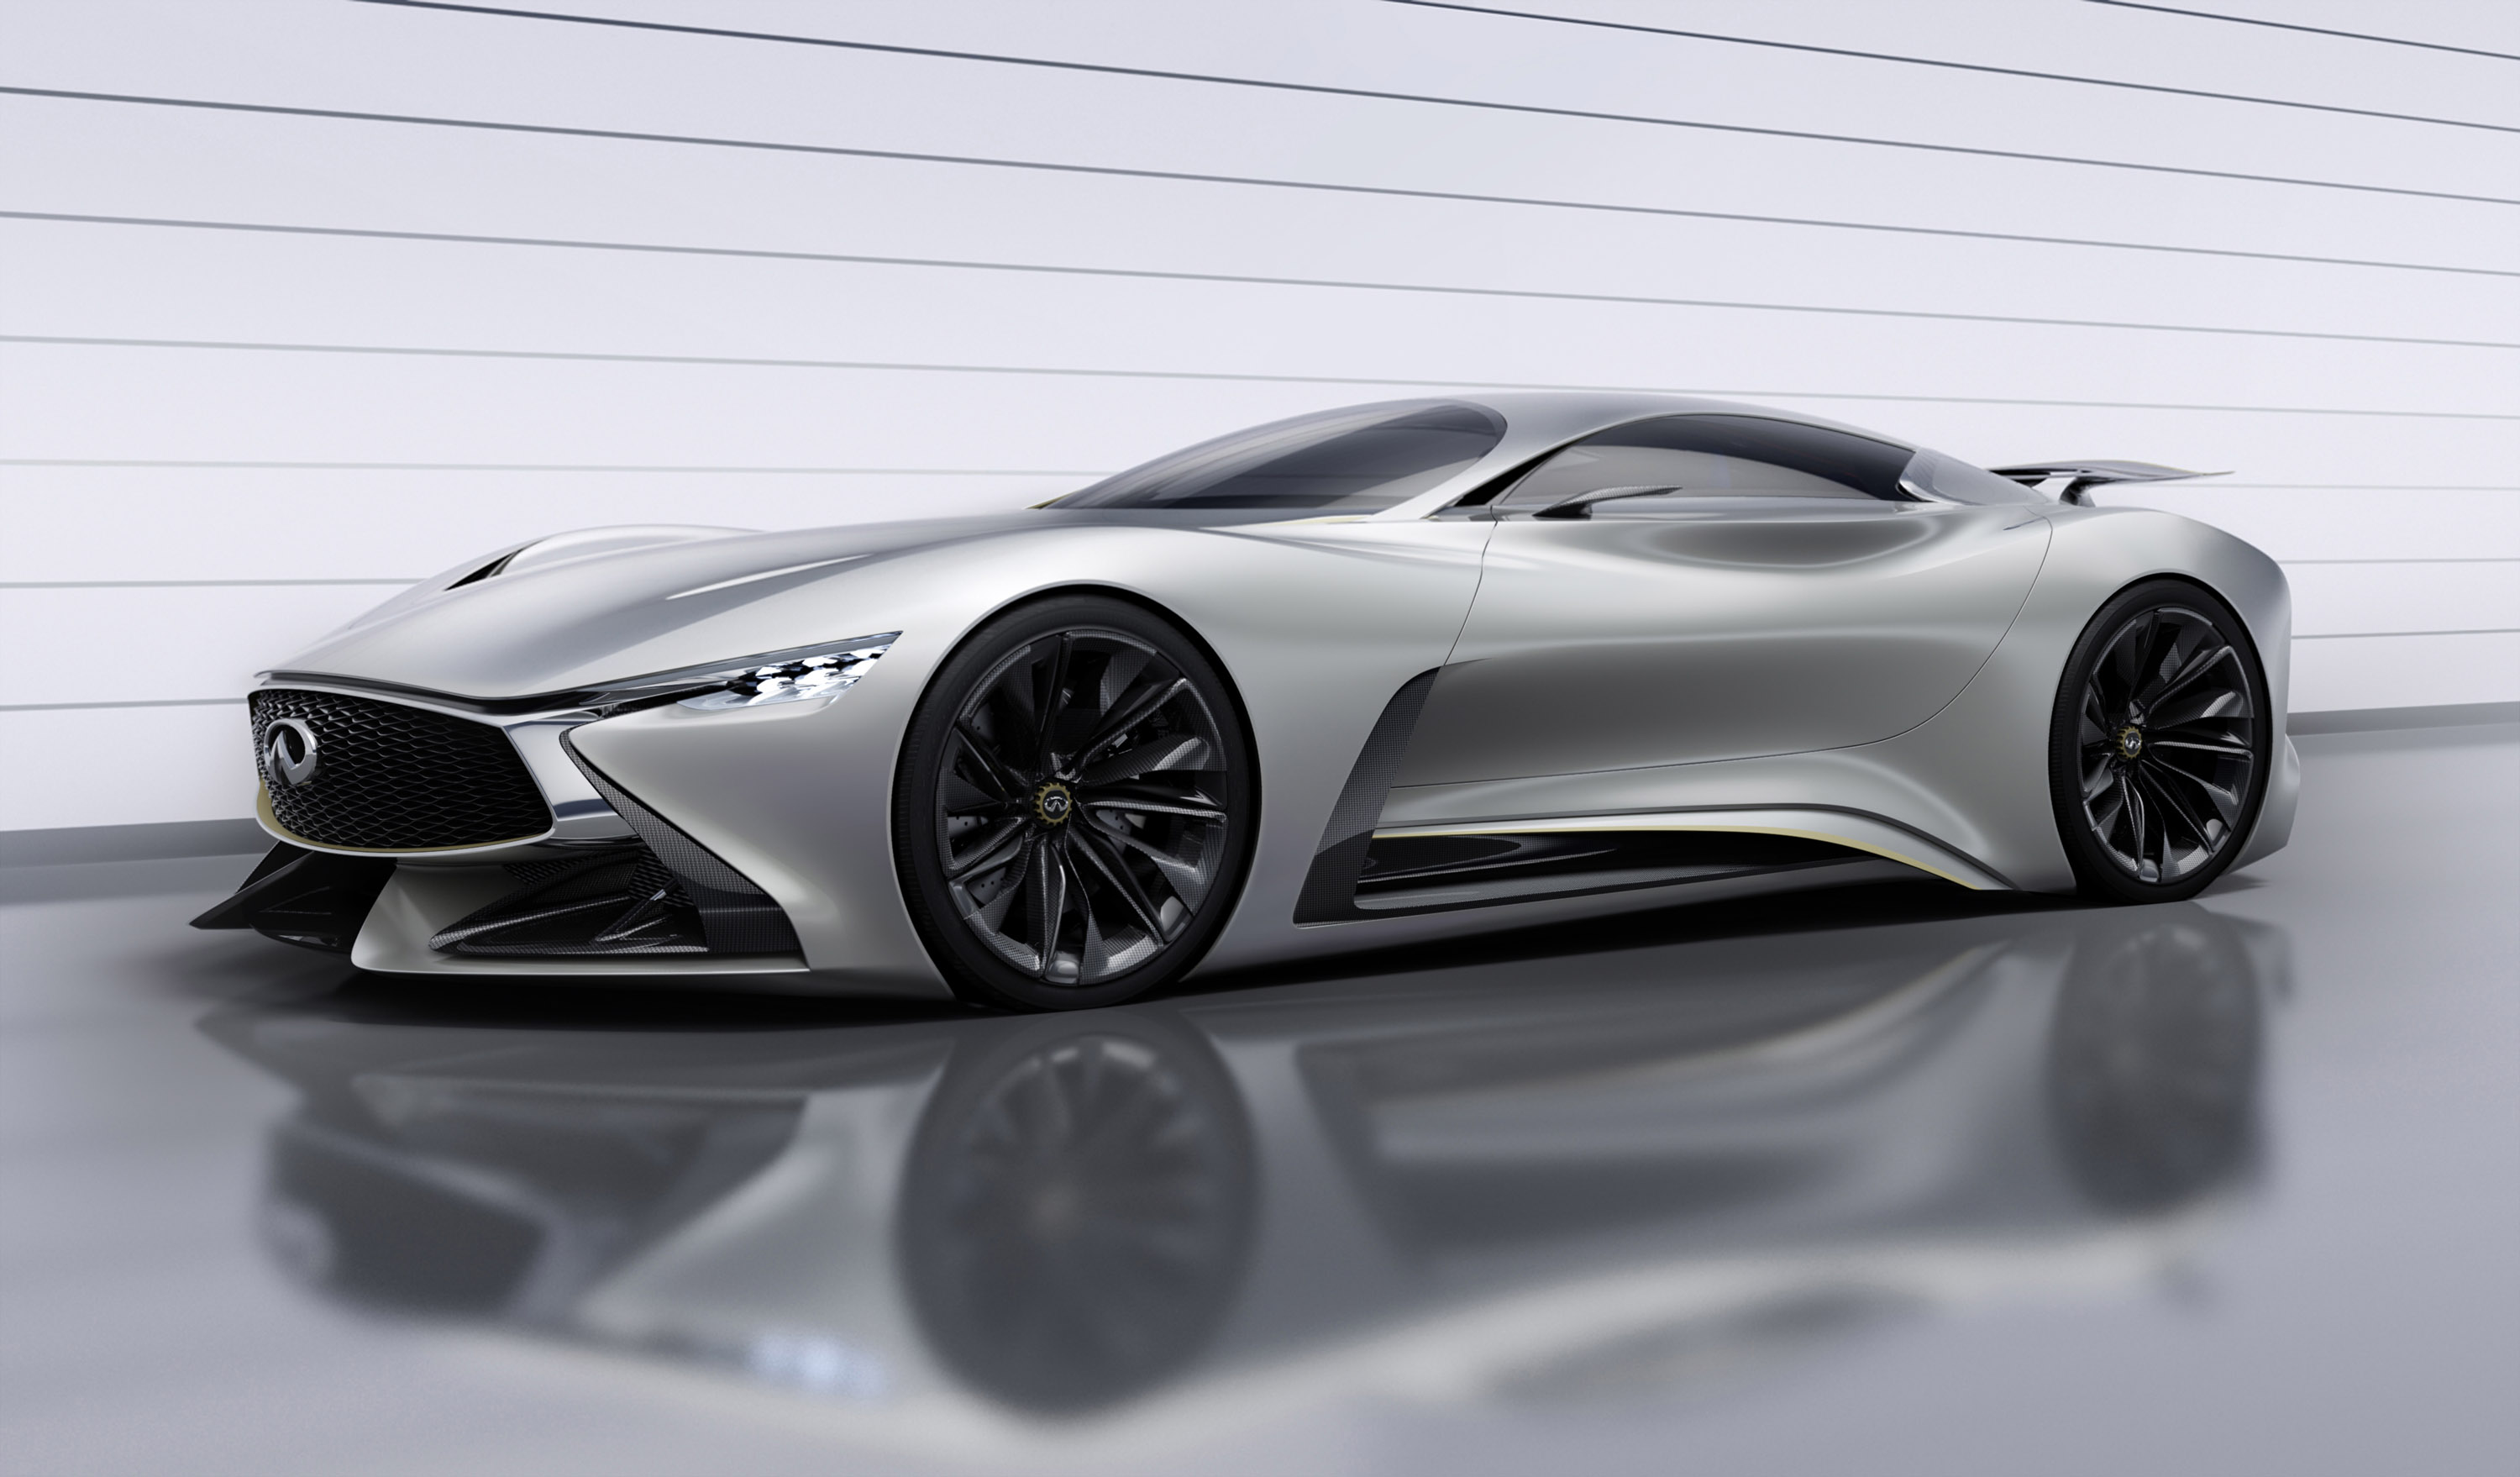 2014 Infiniti Vision Gran Turismo Concept - HD Pictures @ carsinvasion.com